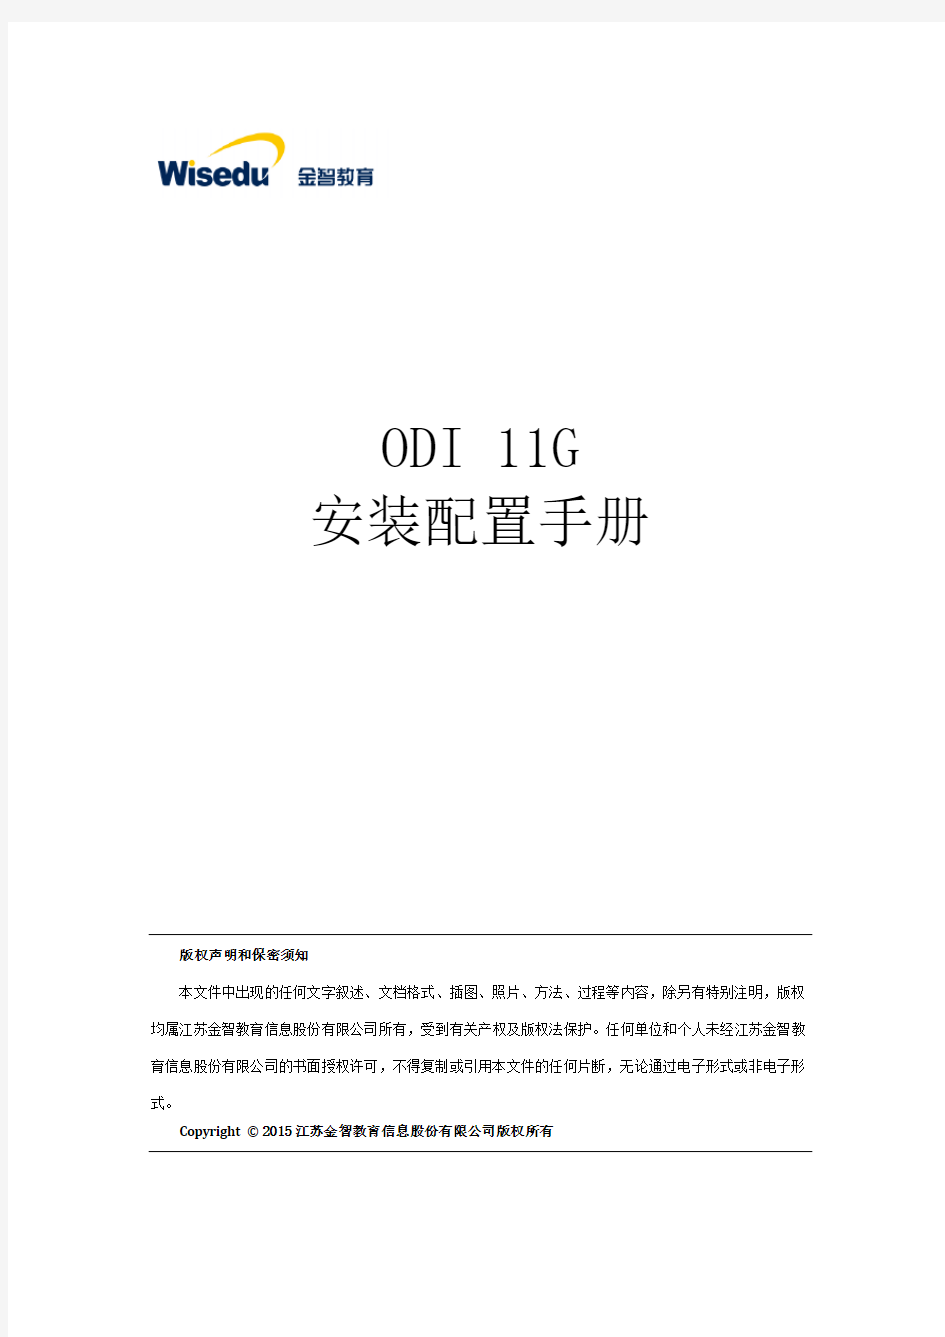 ODI 11G-安装配置手册_V1.0